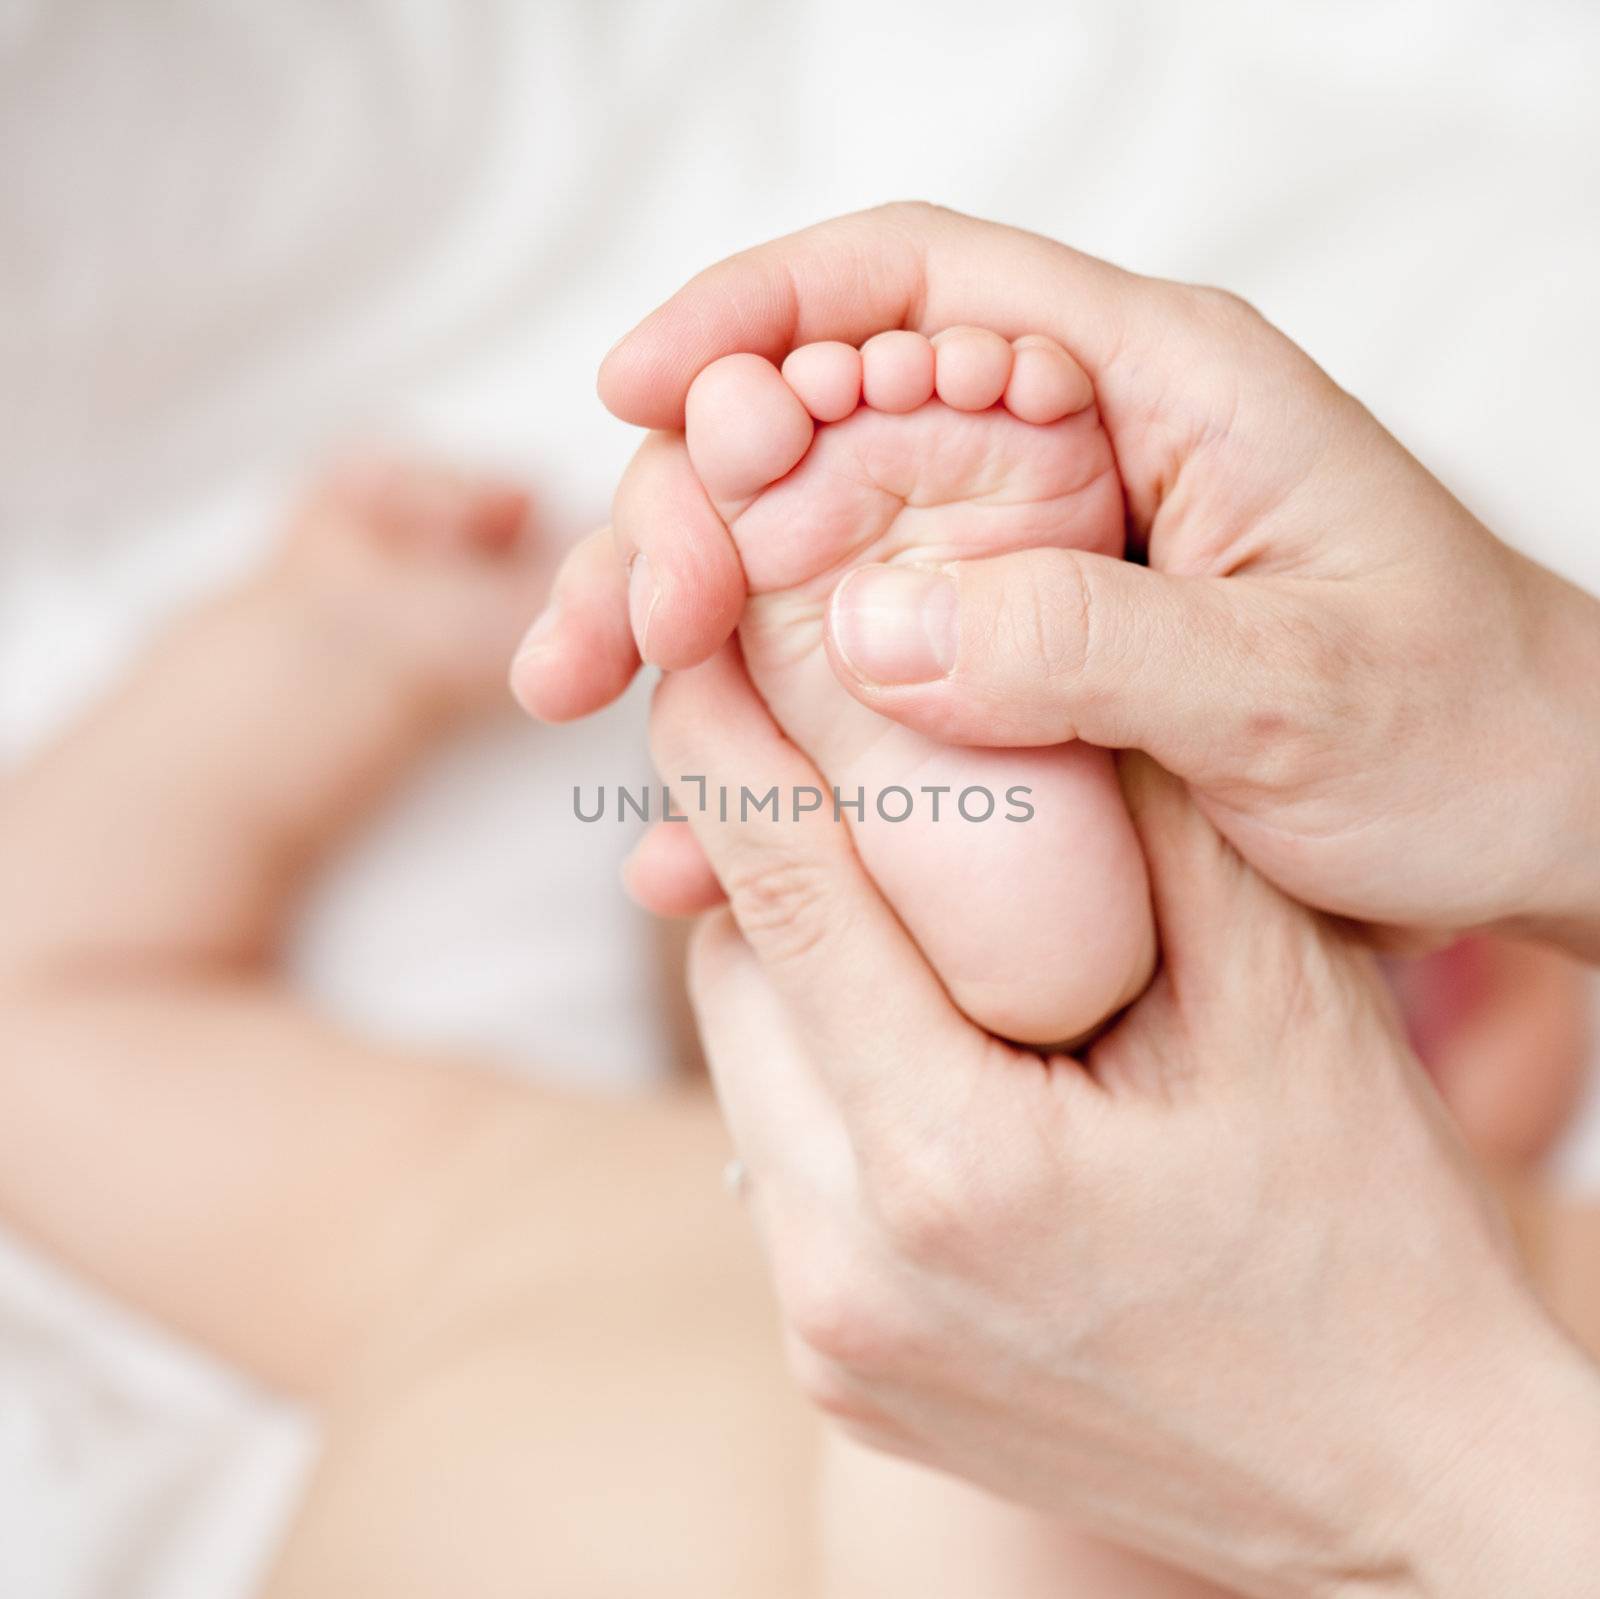 Mother massaging her child's foot, shallow focus